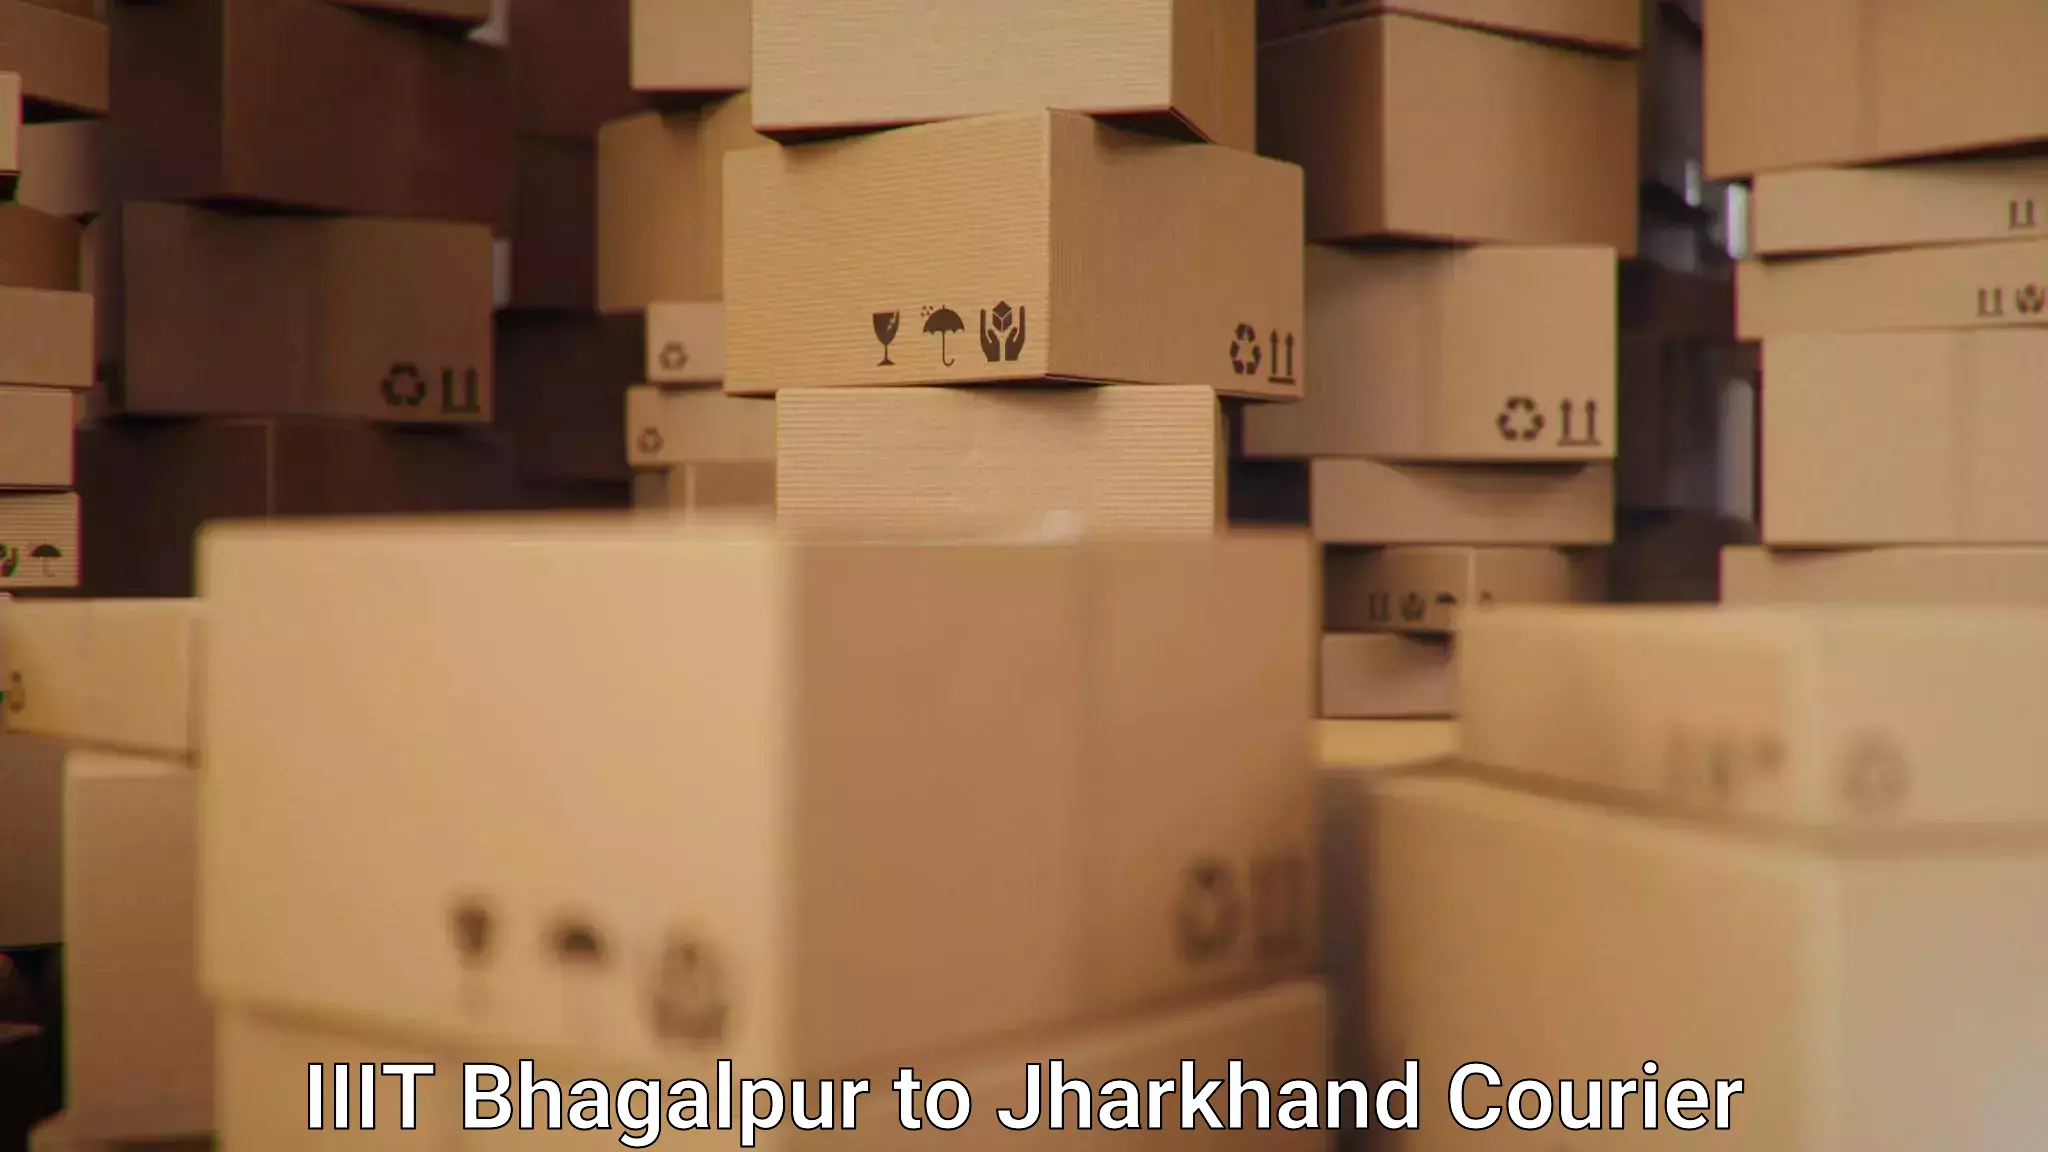 Courier service efficiency IIIT Bhagalpur to Dhanbad